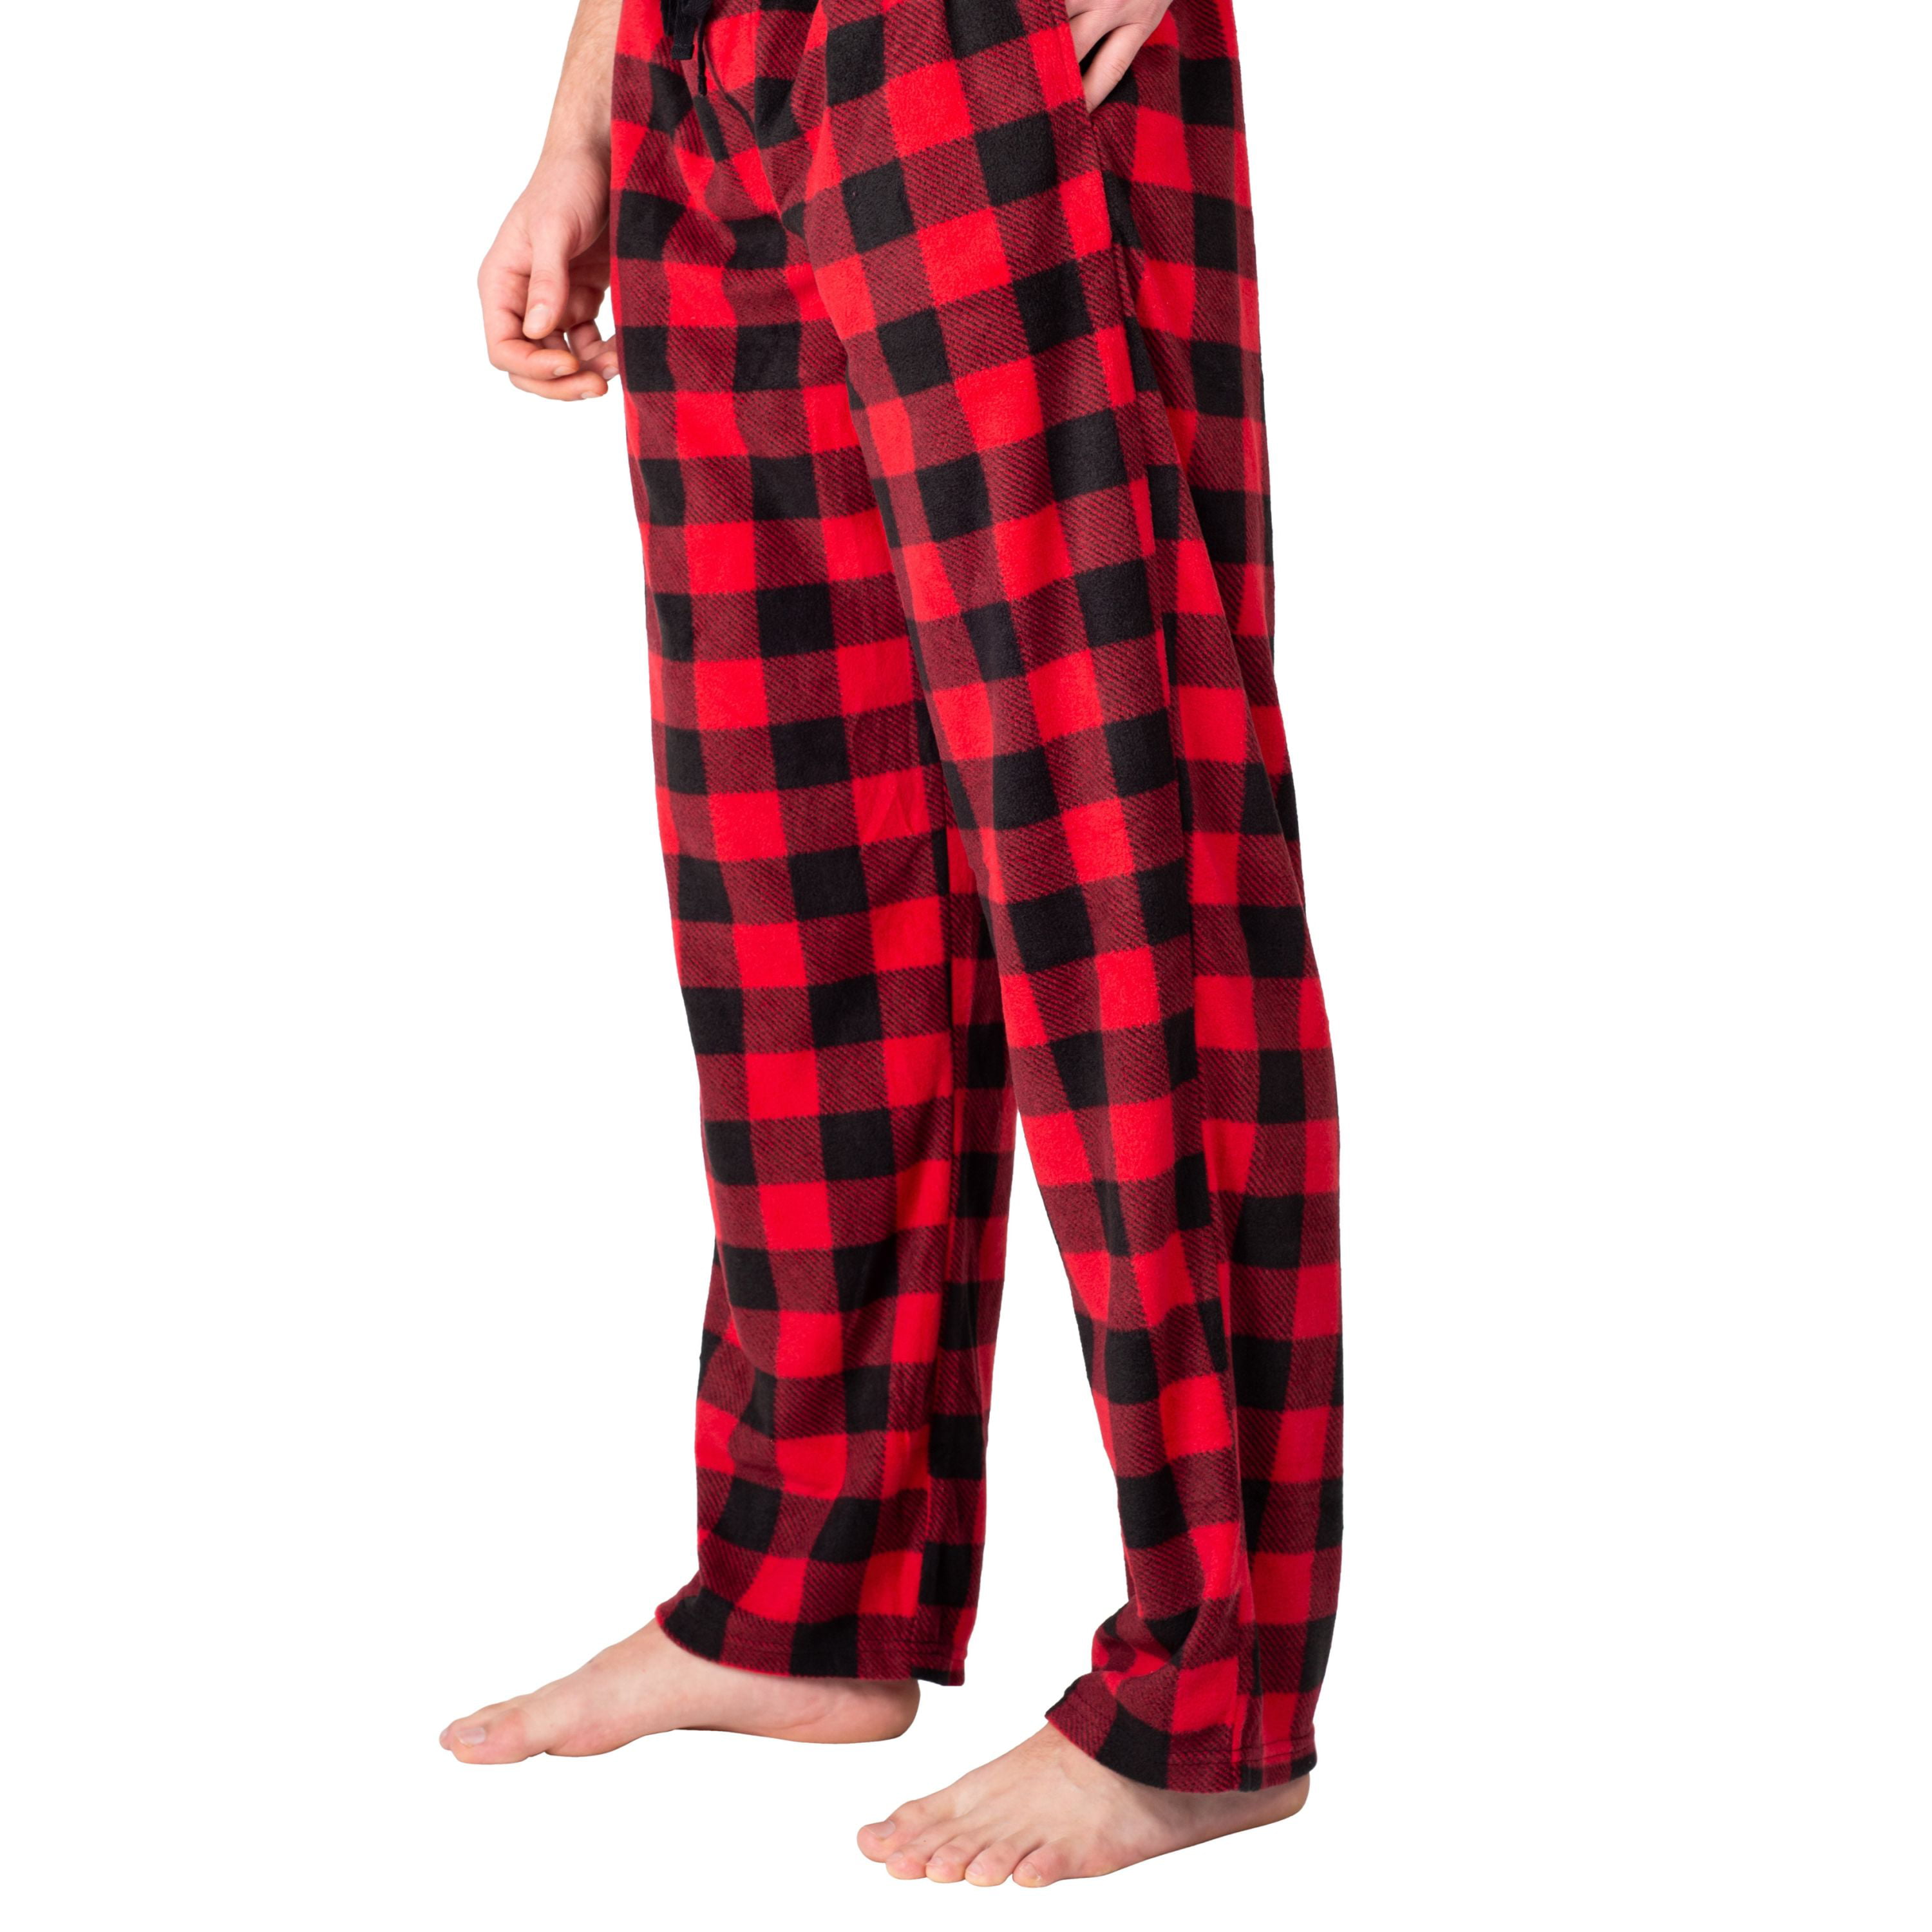 Cynthia Rowley Dog Pajama Pants for Women | Mercari